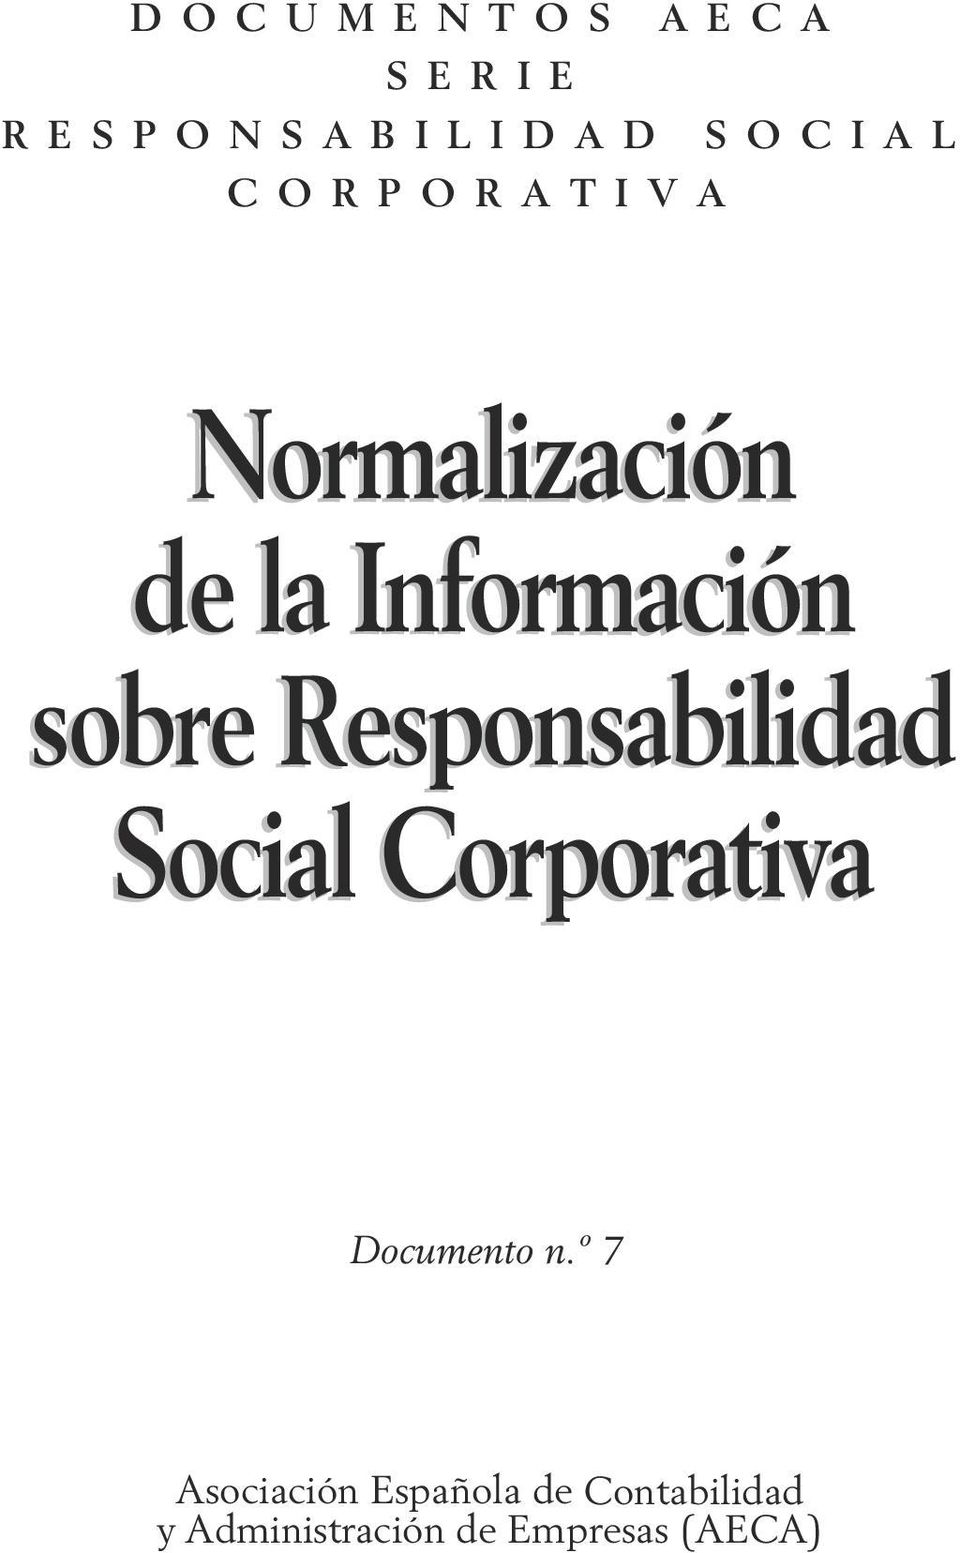 Responsabilidad Social Corporativa Documento n.